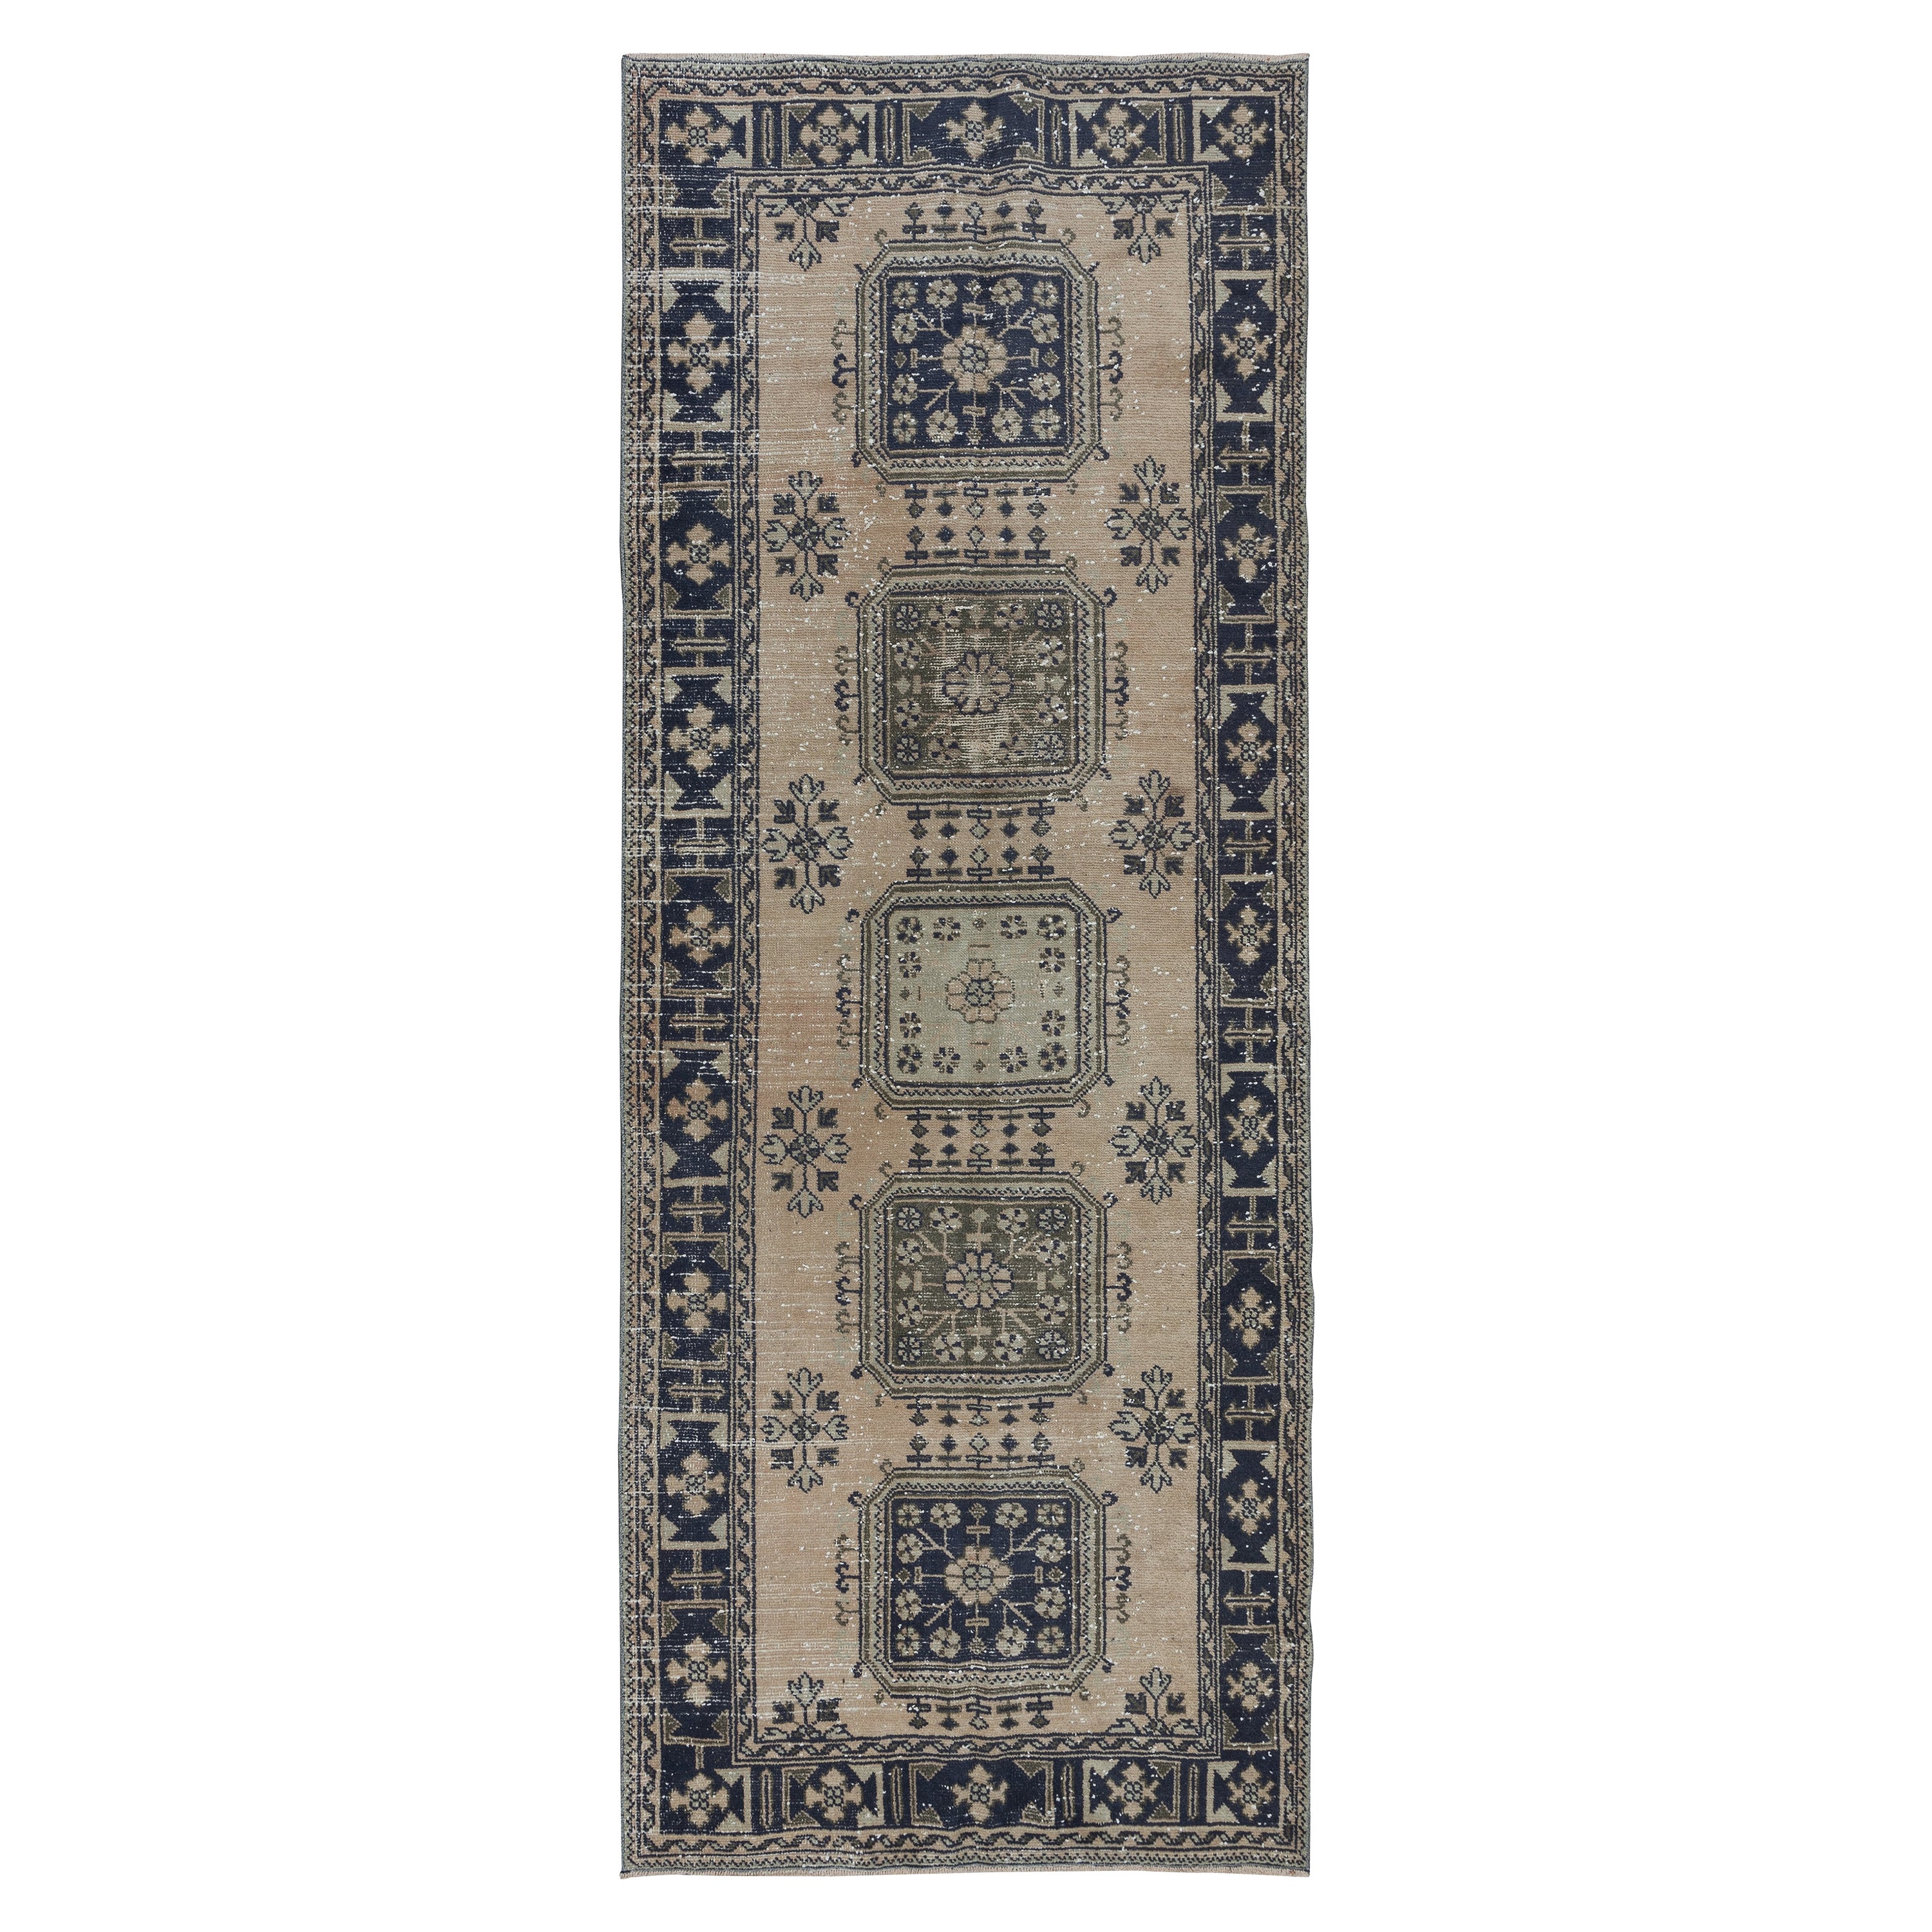 4.6x11.7 Ft Vintage Stair Runner, Handmade Corridor Carpet, Turkish Hallway Rug